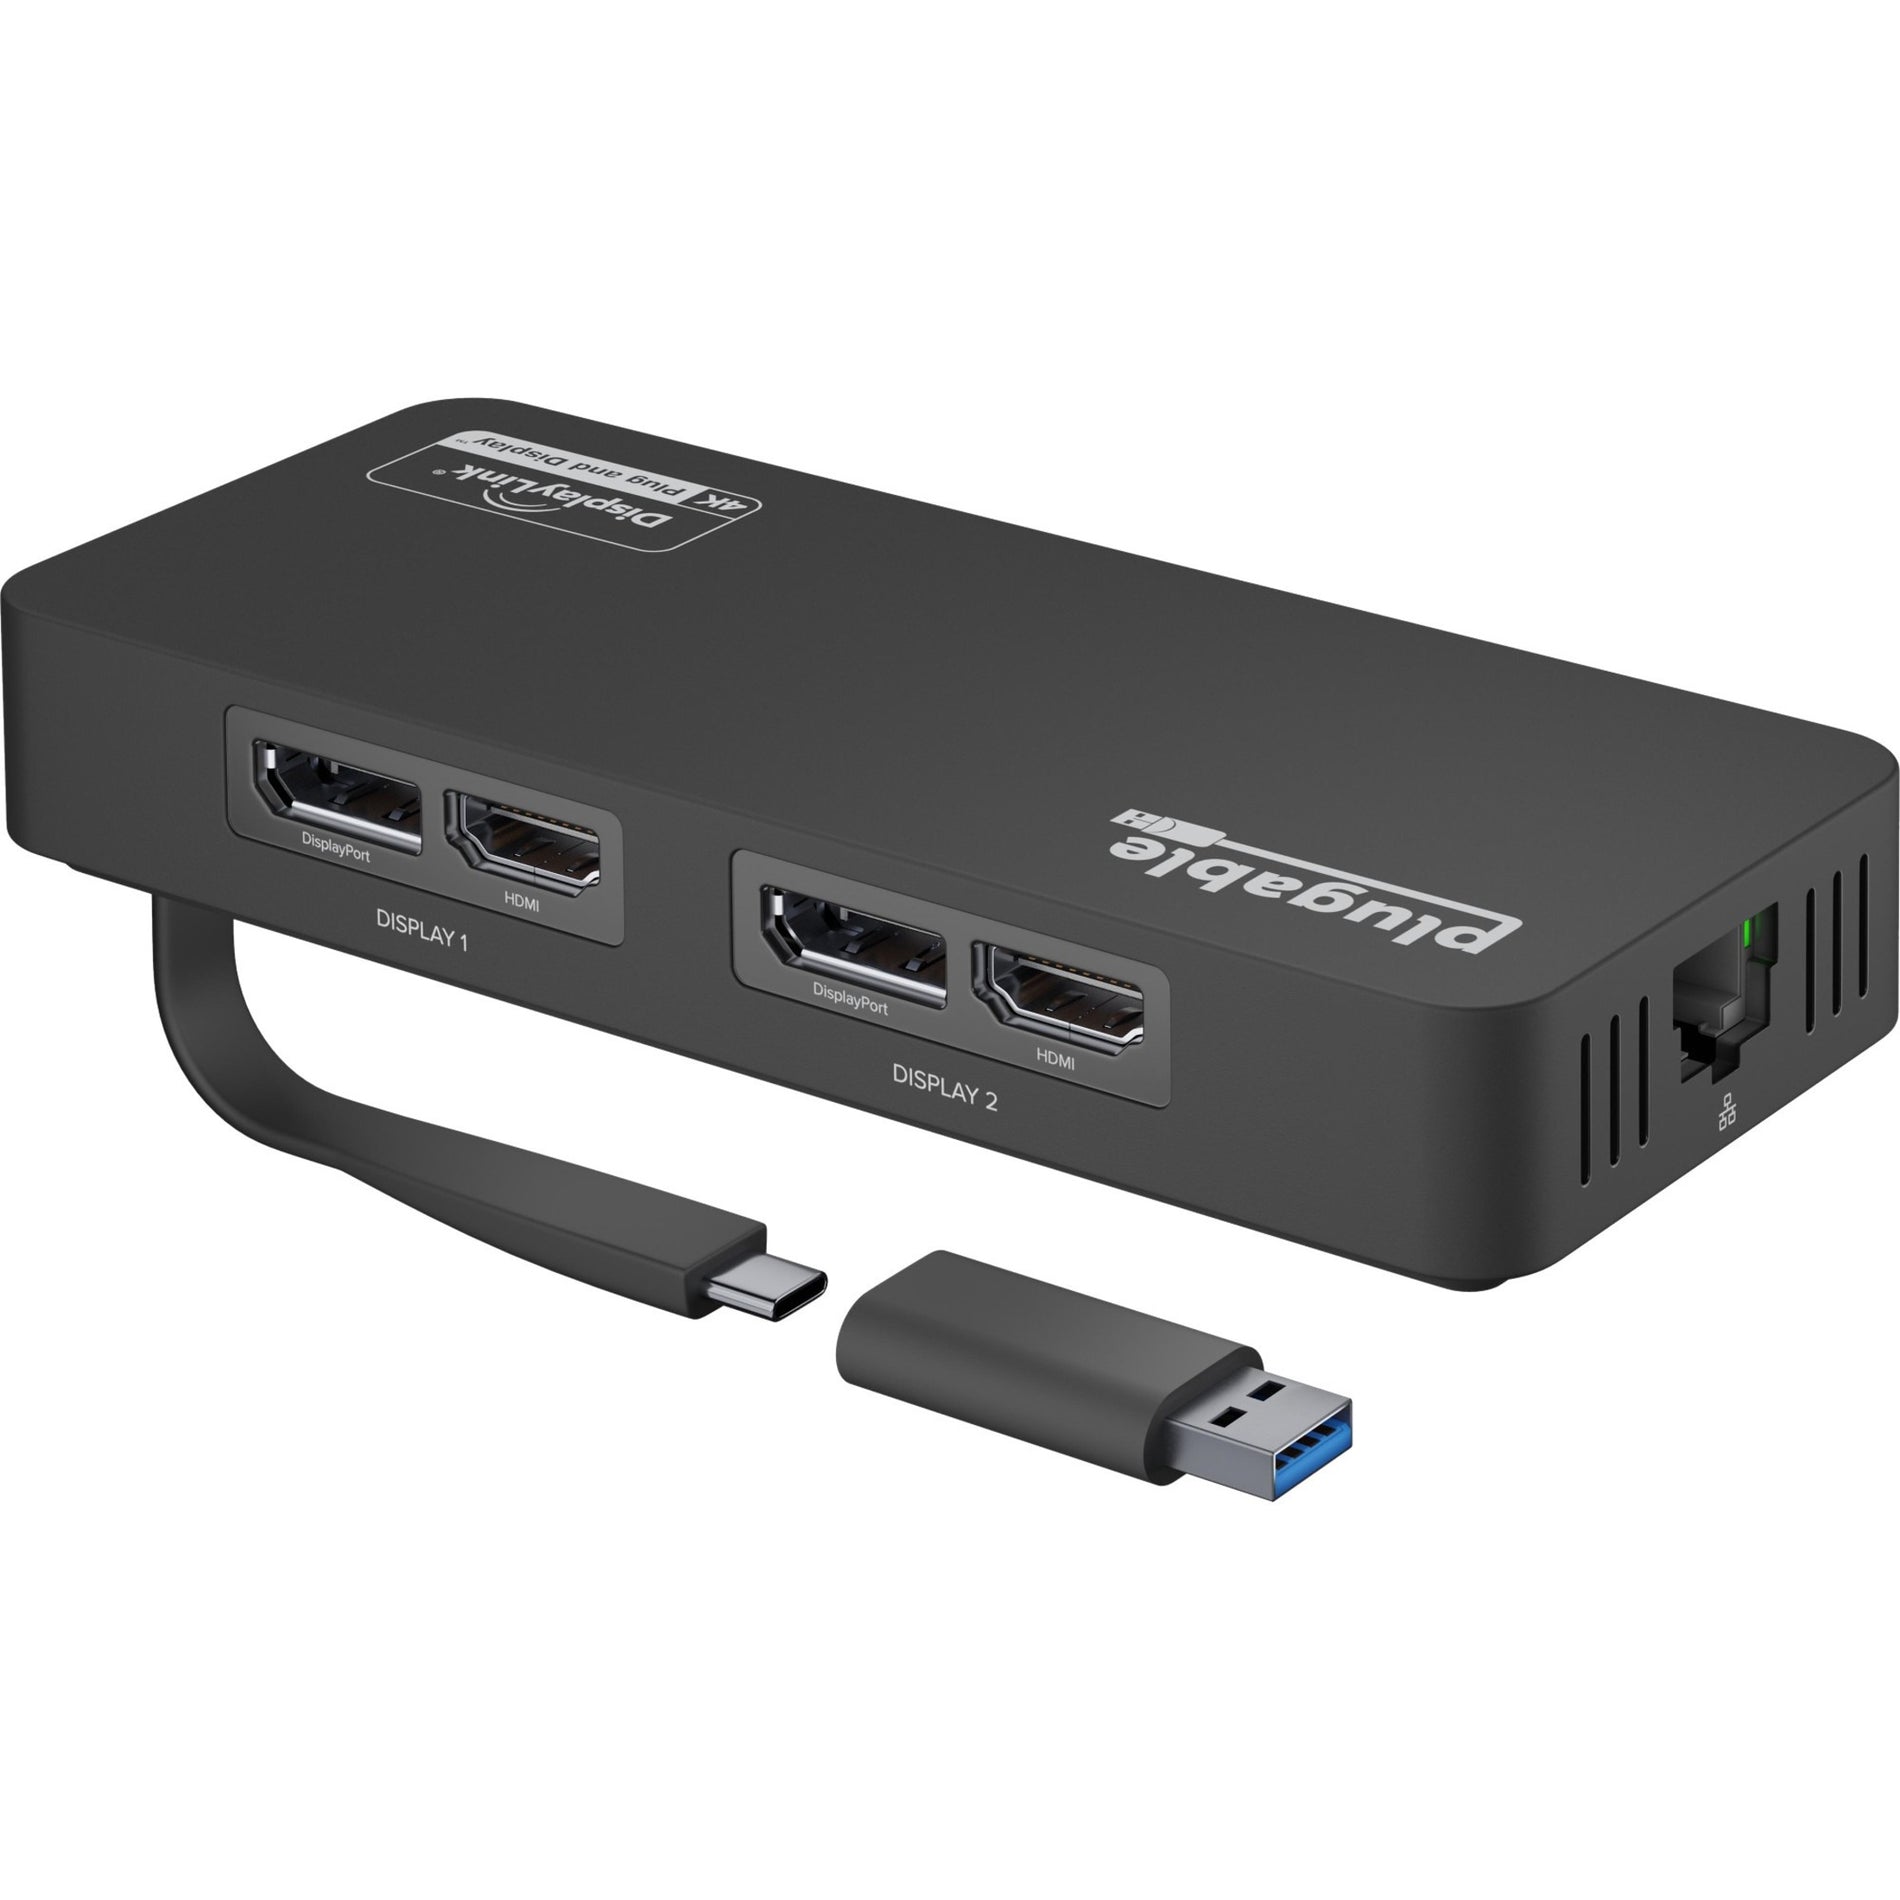 Plugable USBC-6950UE USB Type-C双4K HDMI和千兆以太网适配器，将两台显示器和以太网连接到您的USB-C设备 品牌名称：插件公司 品牌名称翻译：Plugable